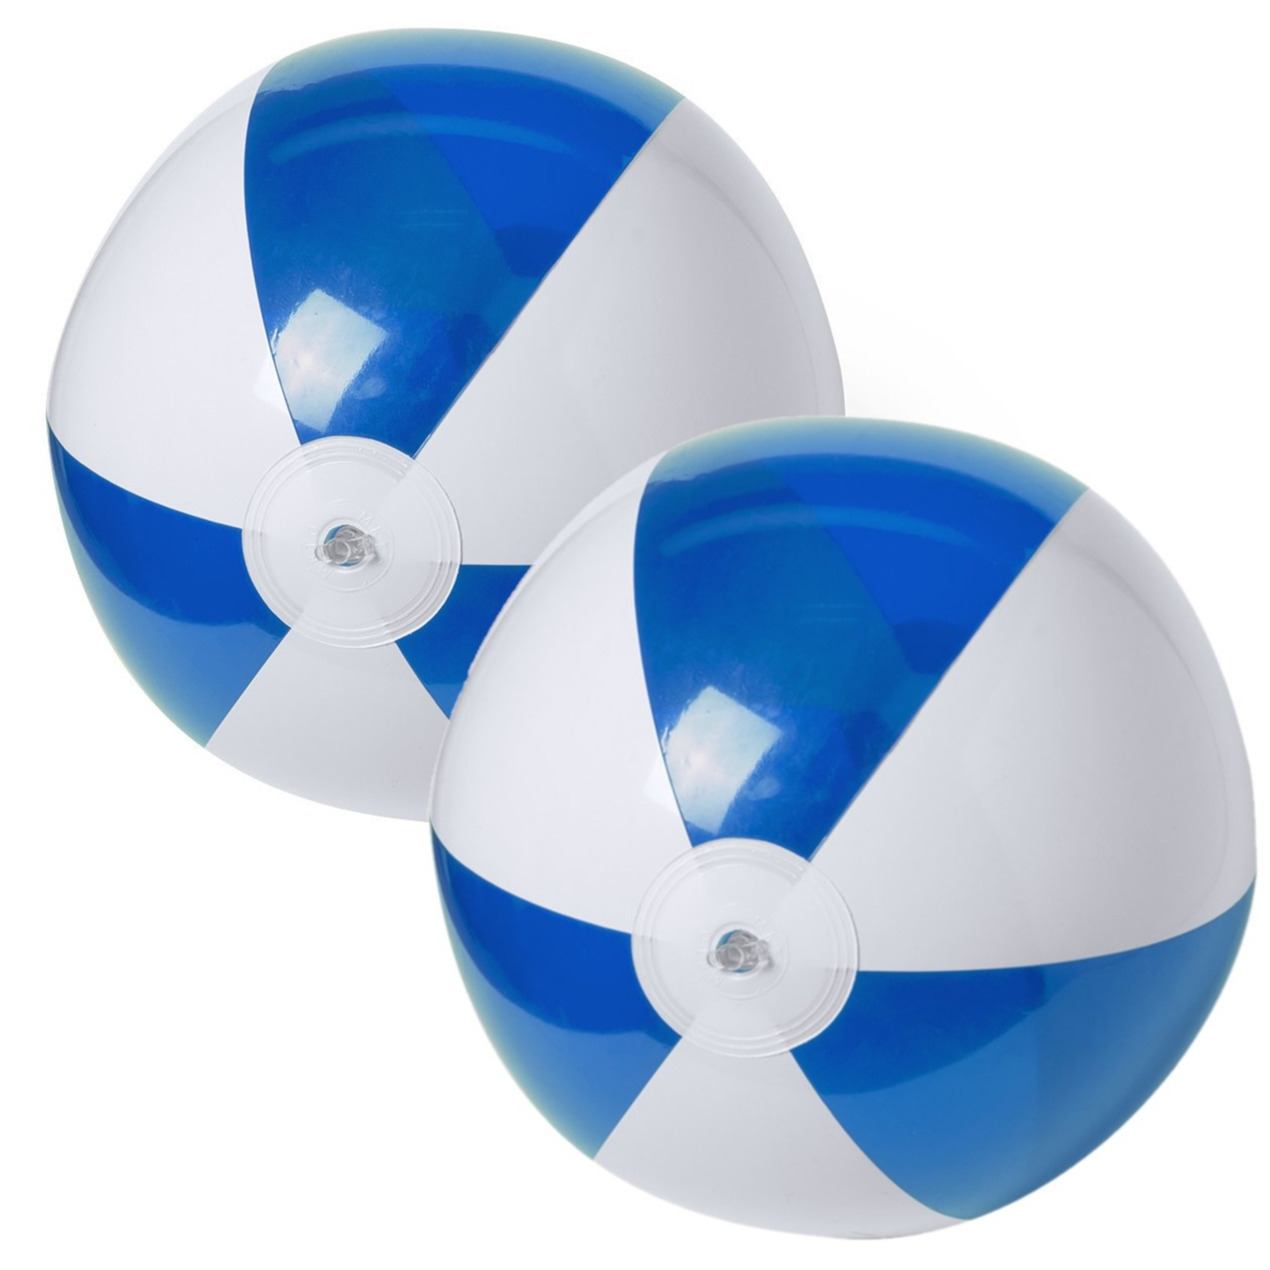 2x stuks opblaasbare strandballen plastic blauw-wit 28 cm